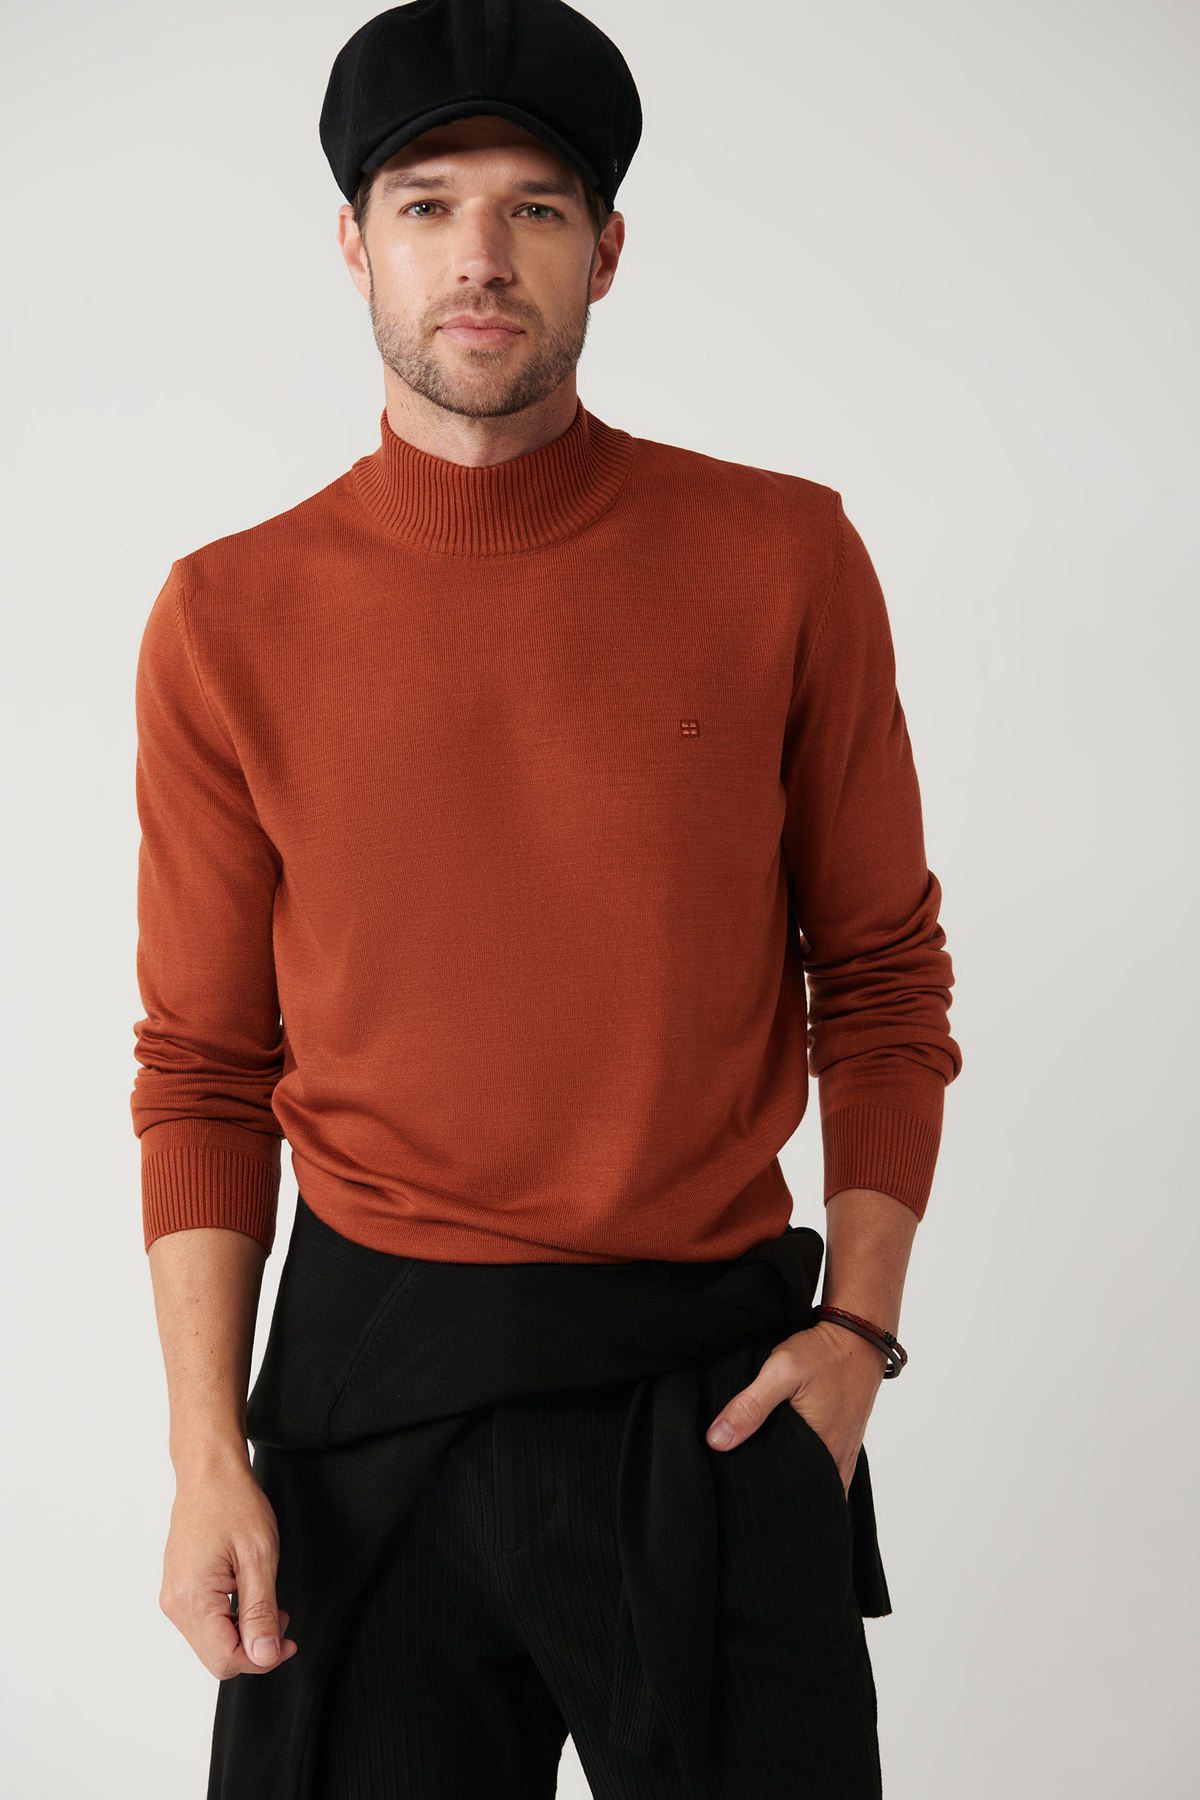 Avva Tile Unisex Knitwear Sweater Half Turtleneck Non-Pilling Regular Fit